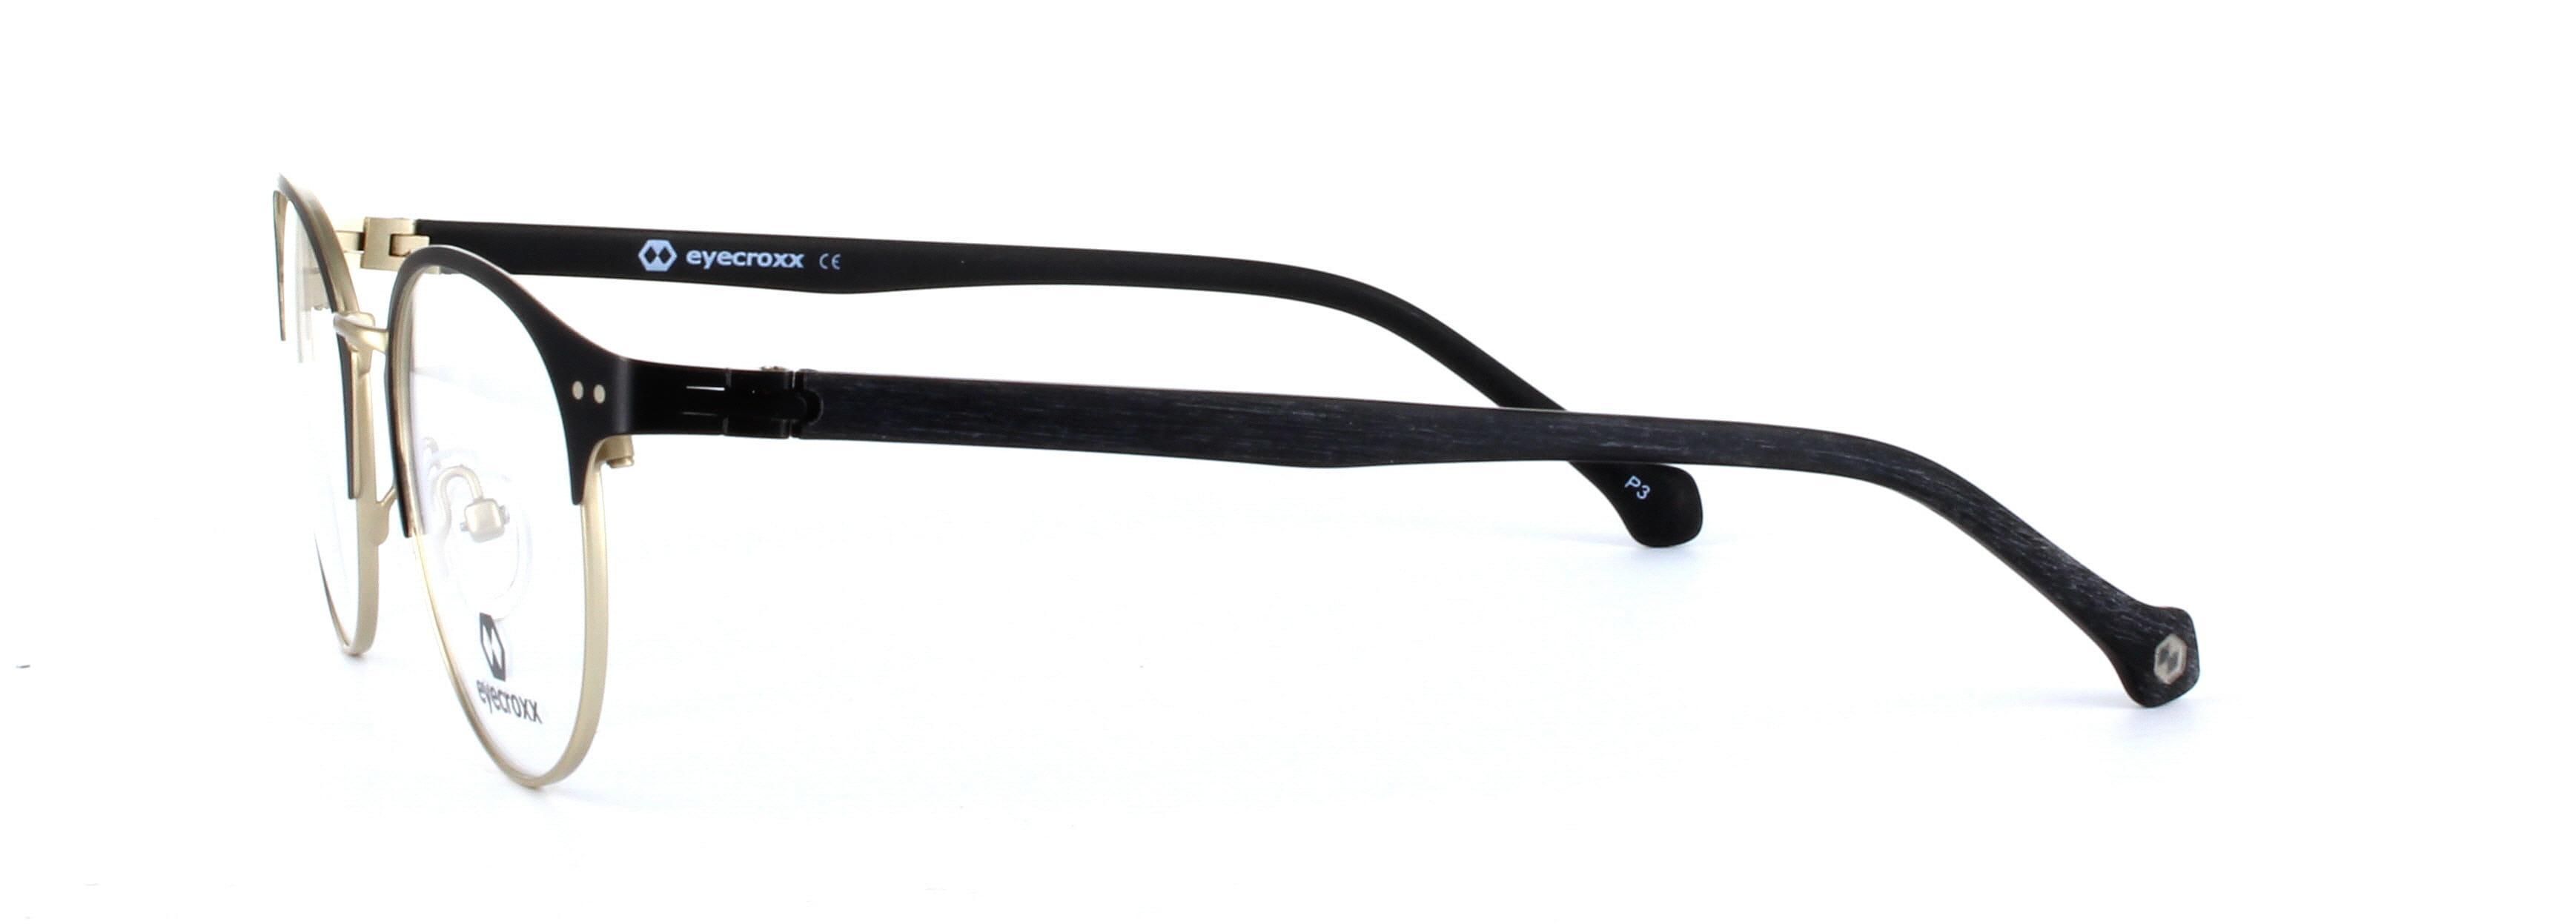 Eyecroxx 543 Black Full Rim Round Metal Glasses - Image View 2